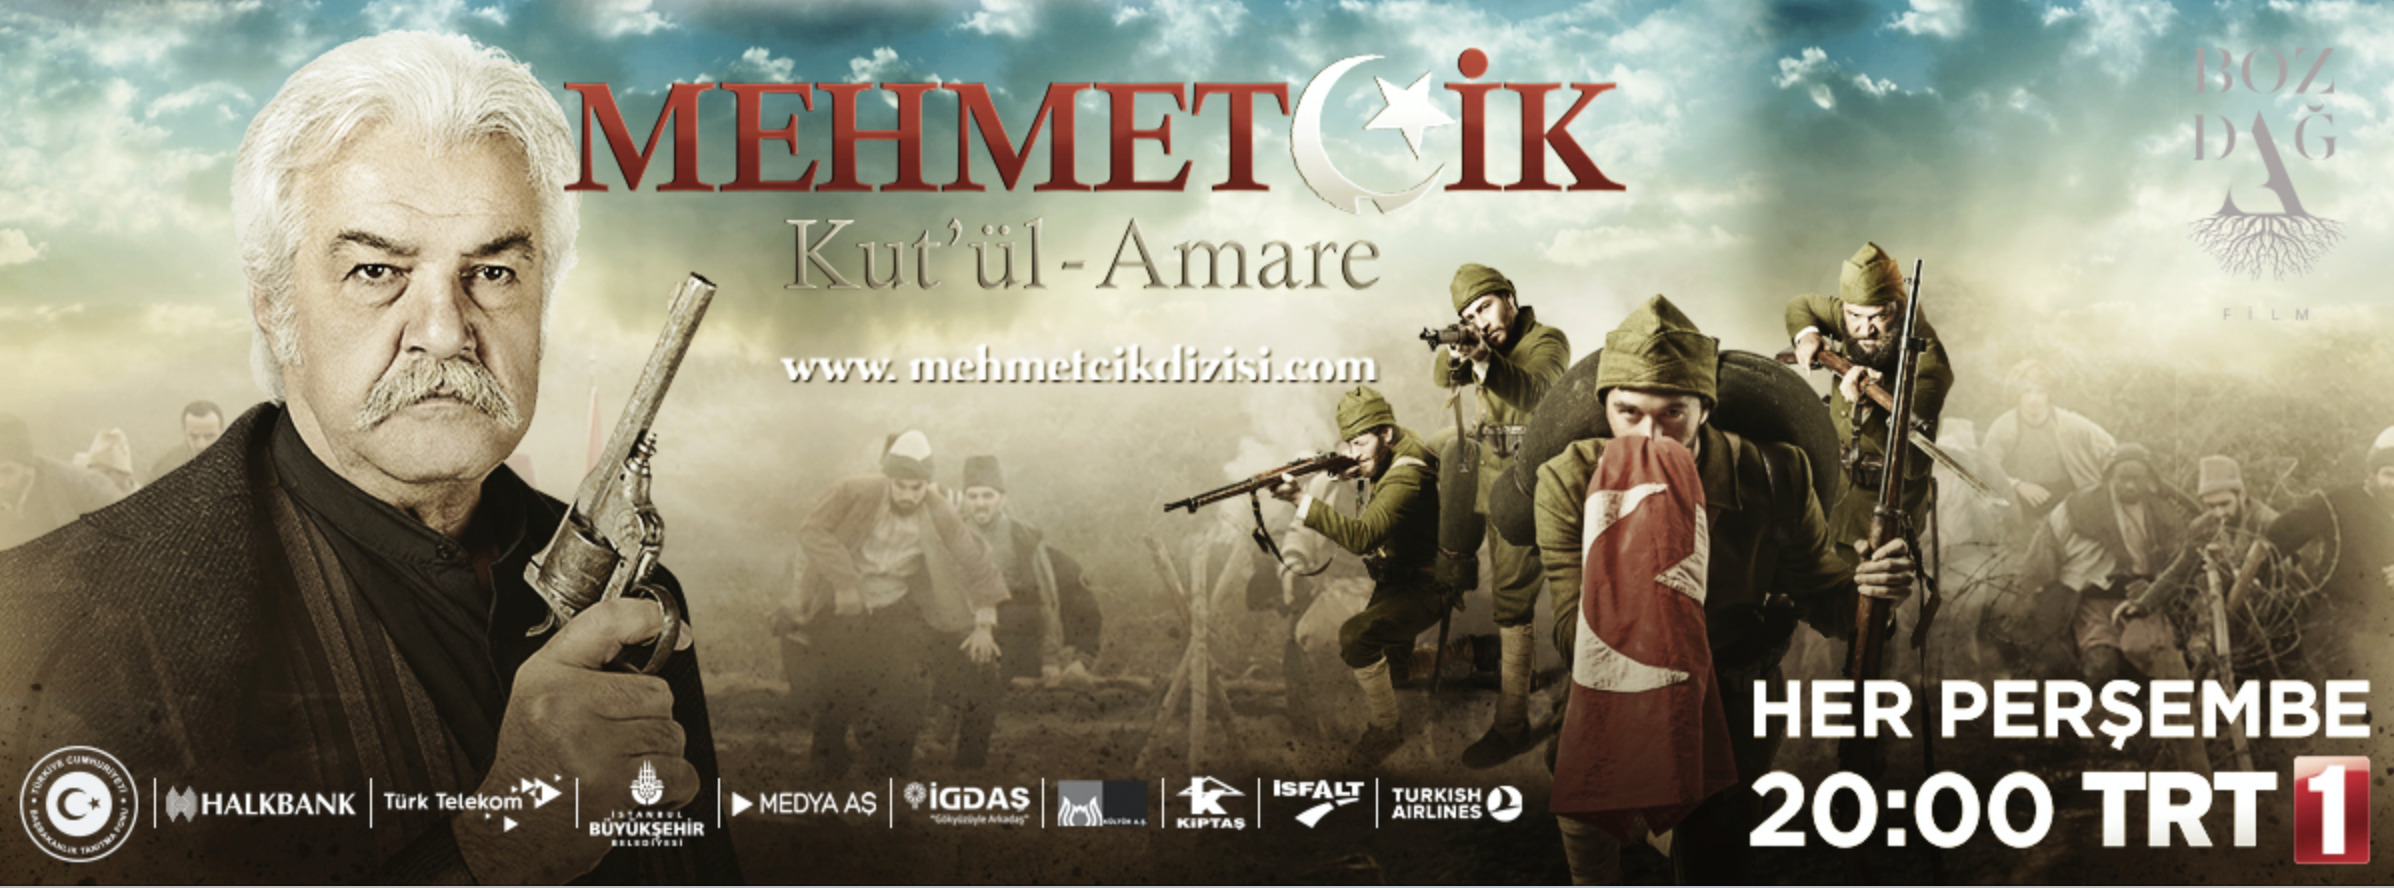 Mega Sized TV Poster Image for Mehmetçik Kut'ül Amare (#30 of 41)